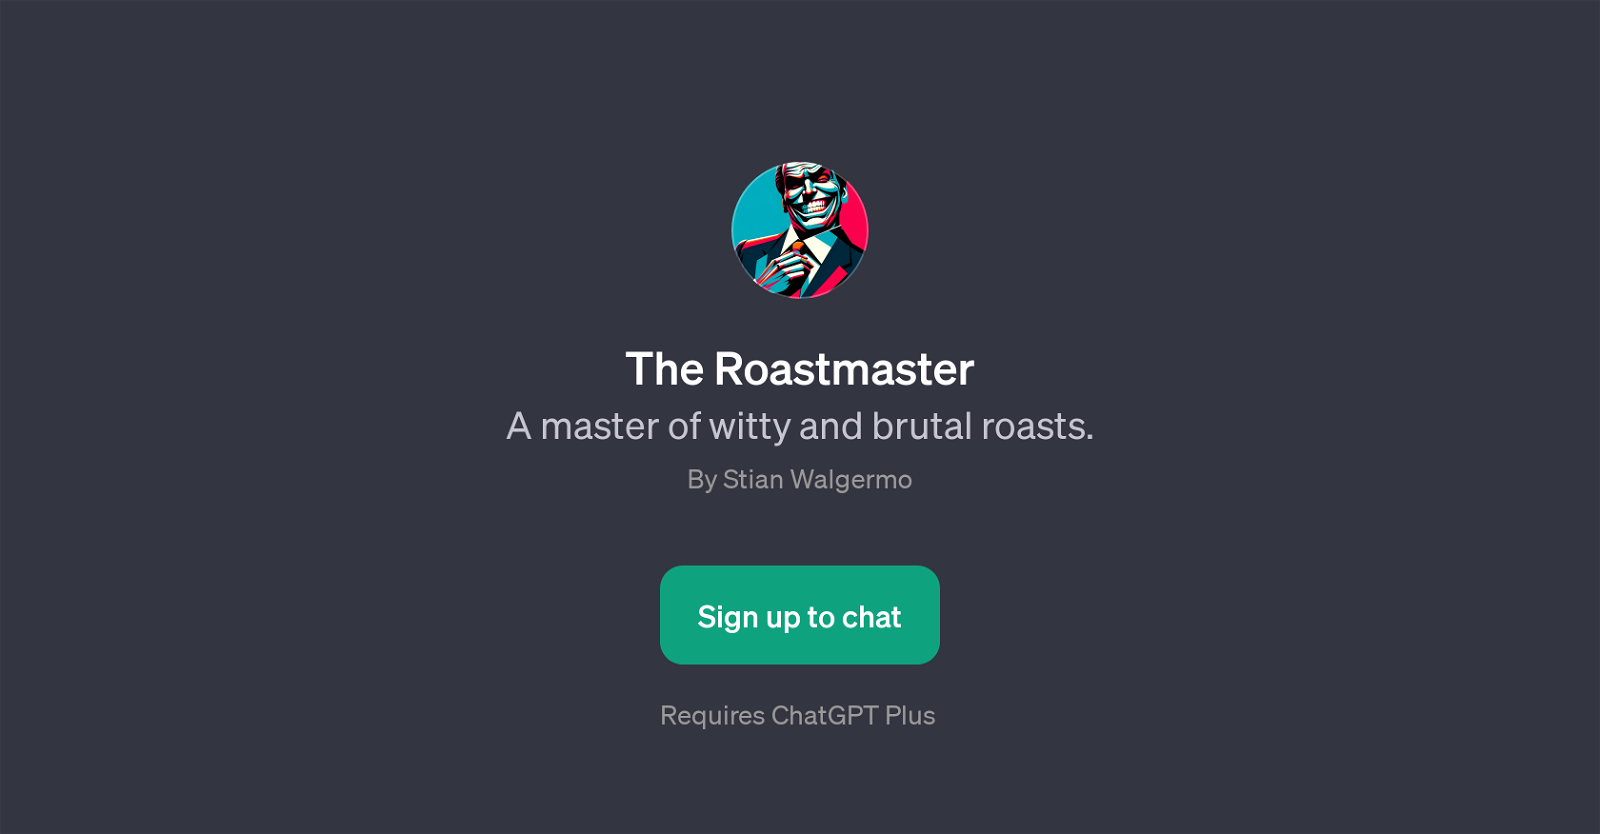 The Roastmaster website